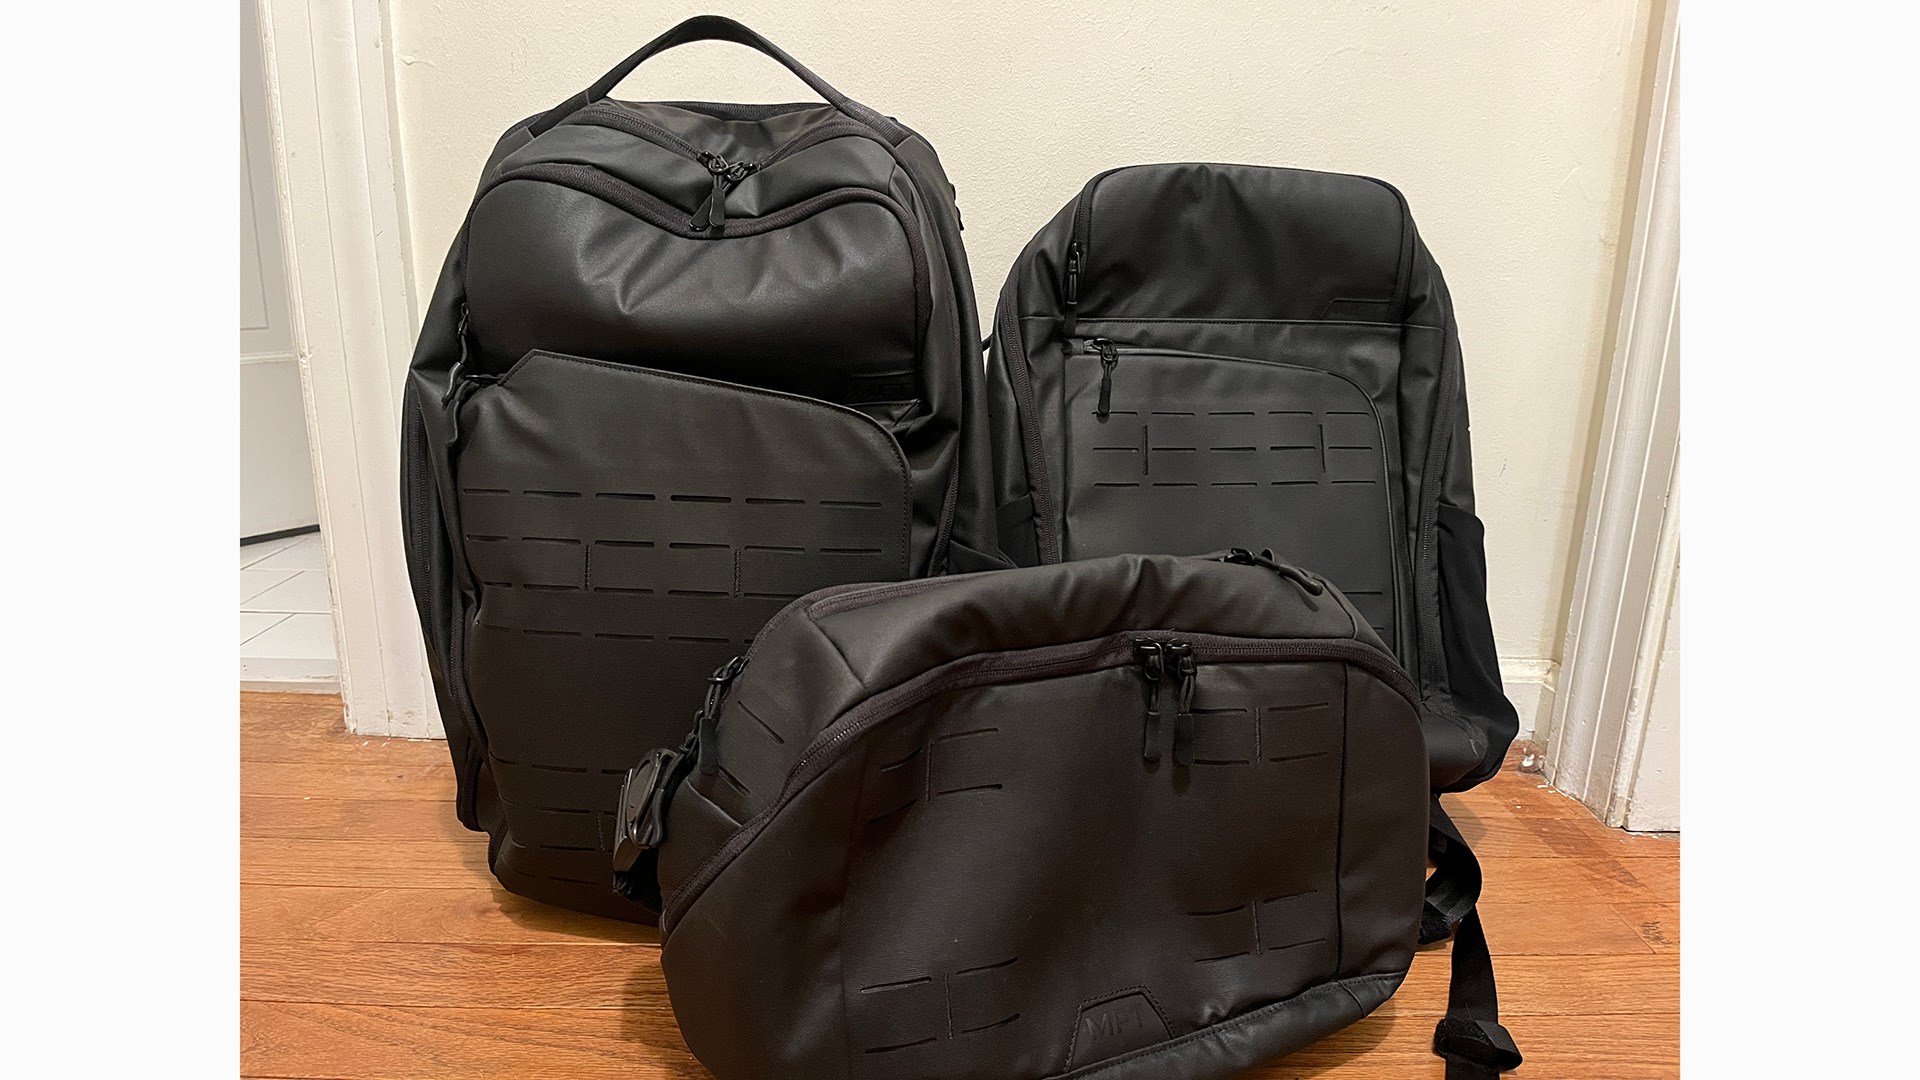 MFT backpacks